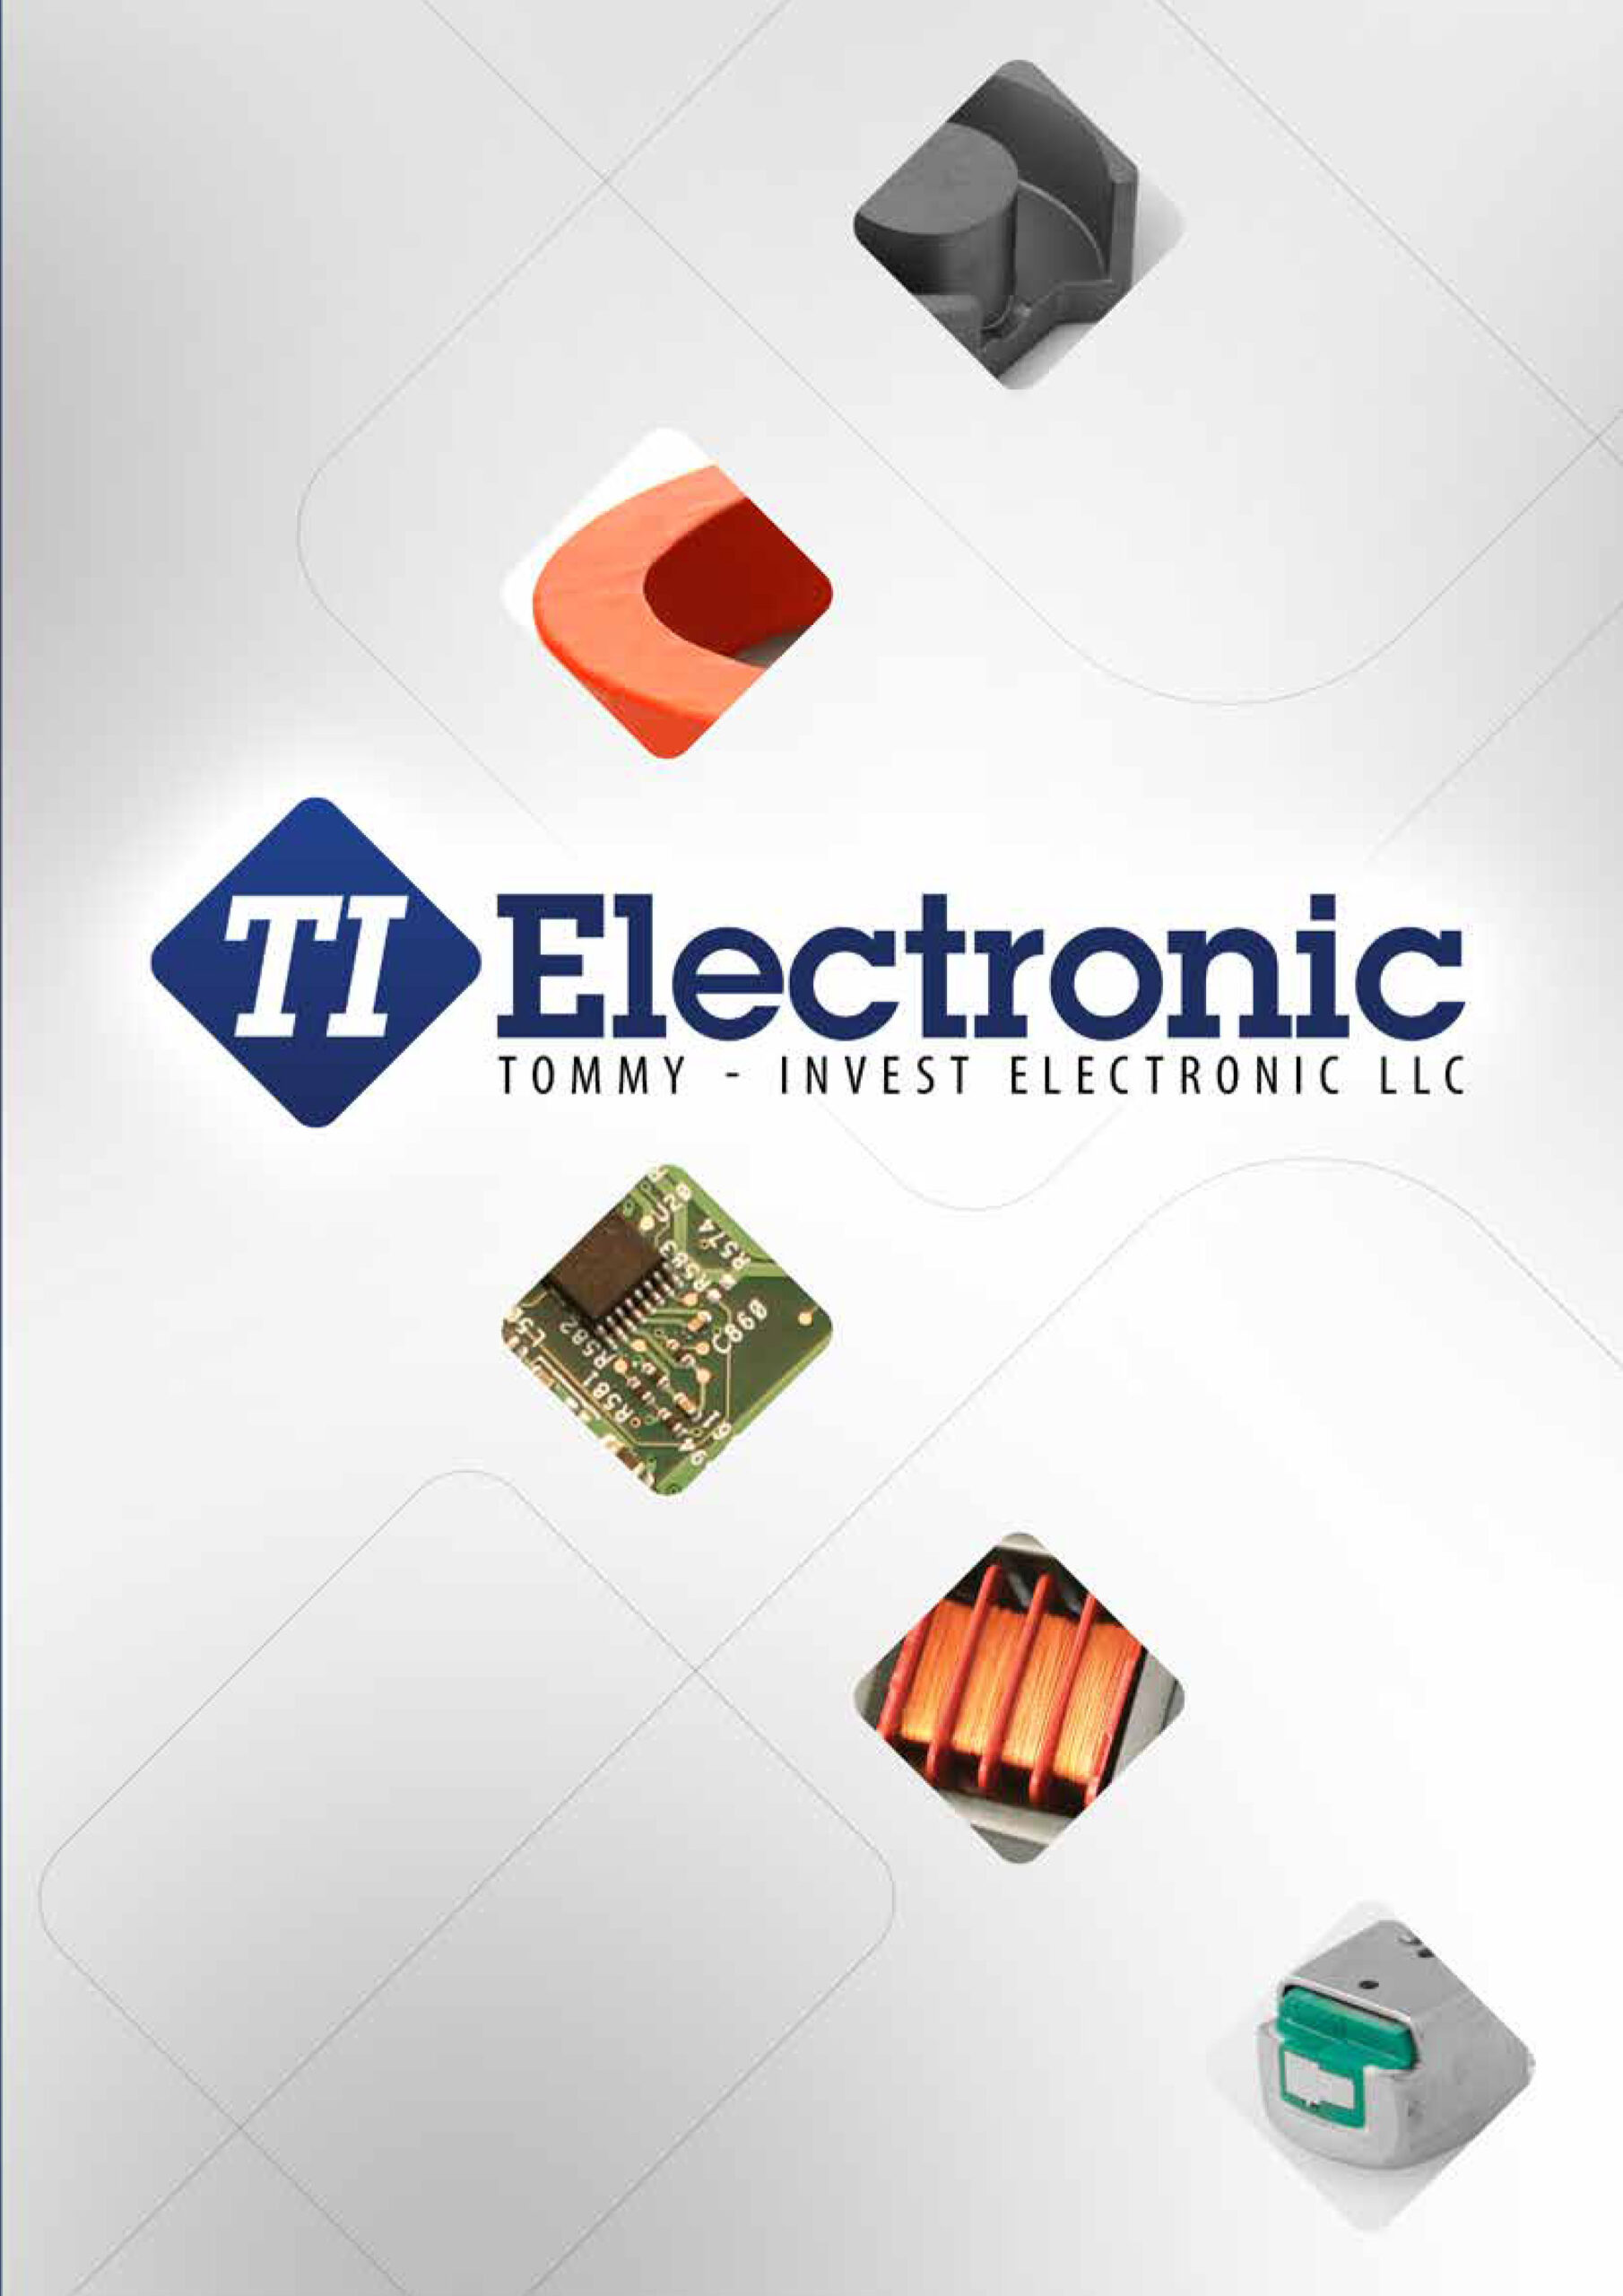 TI-Electronic company catalog hungarian